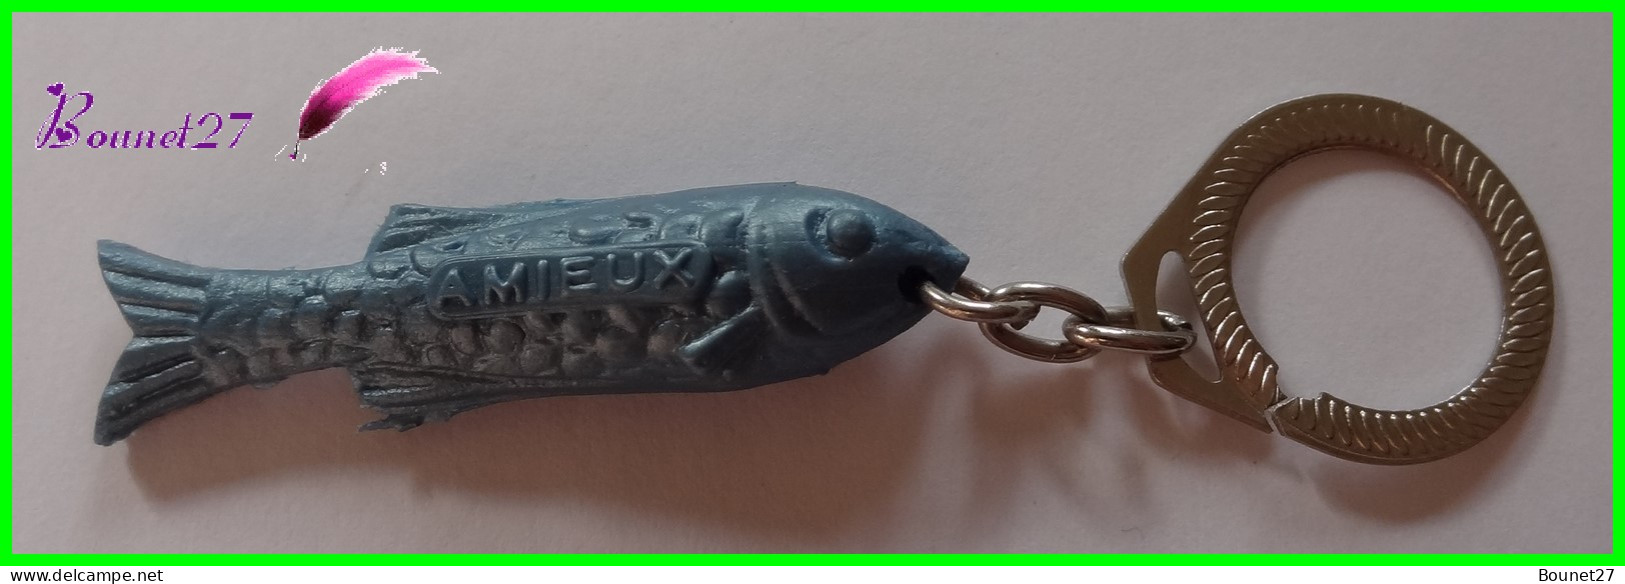 Porte-clés sardine